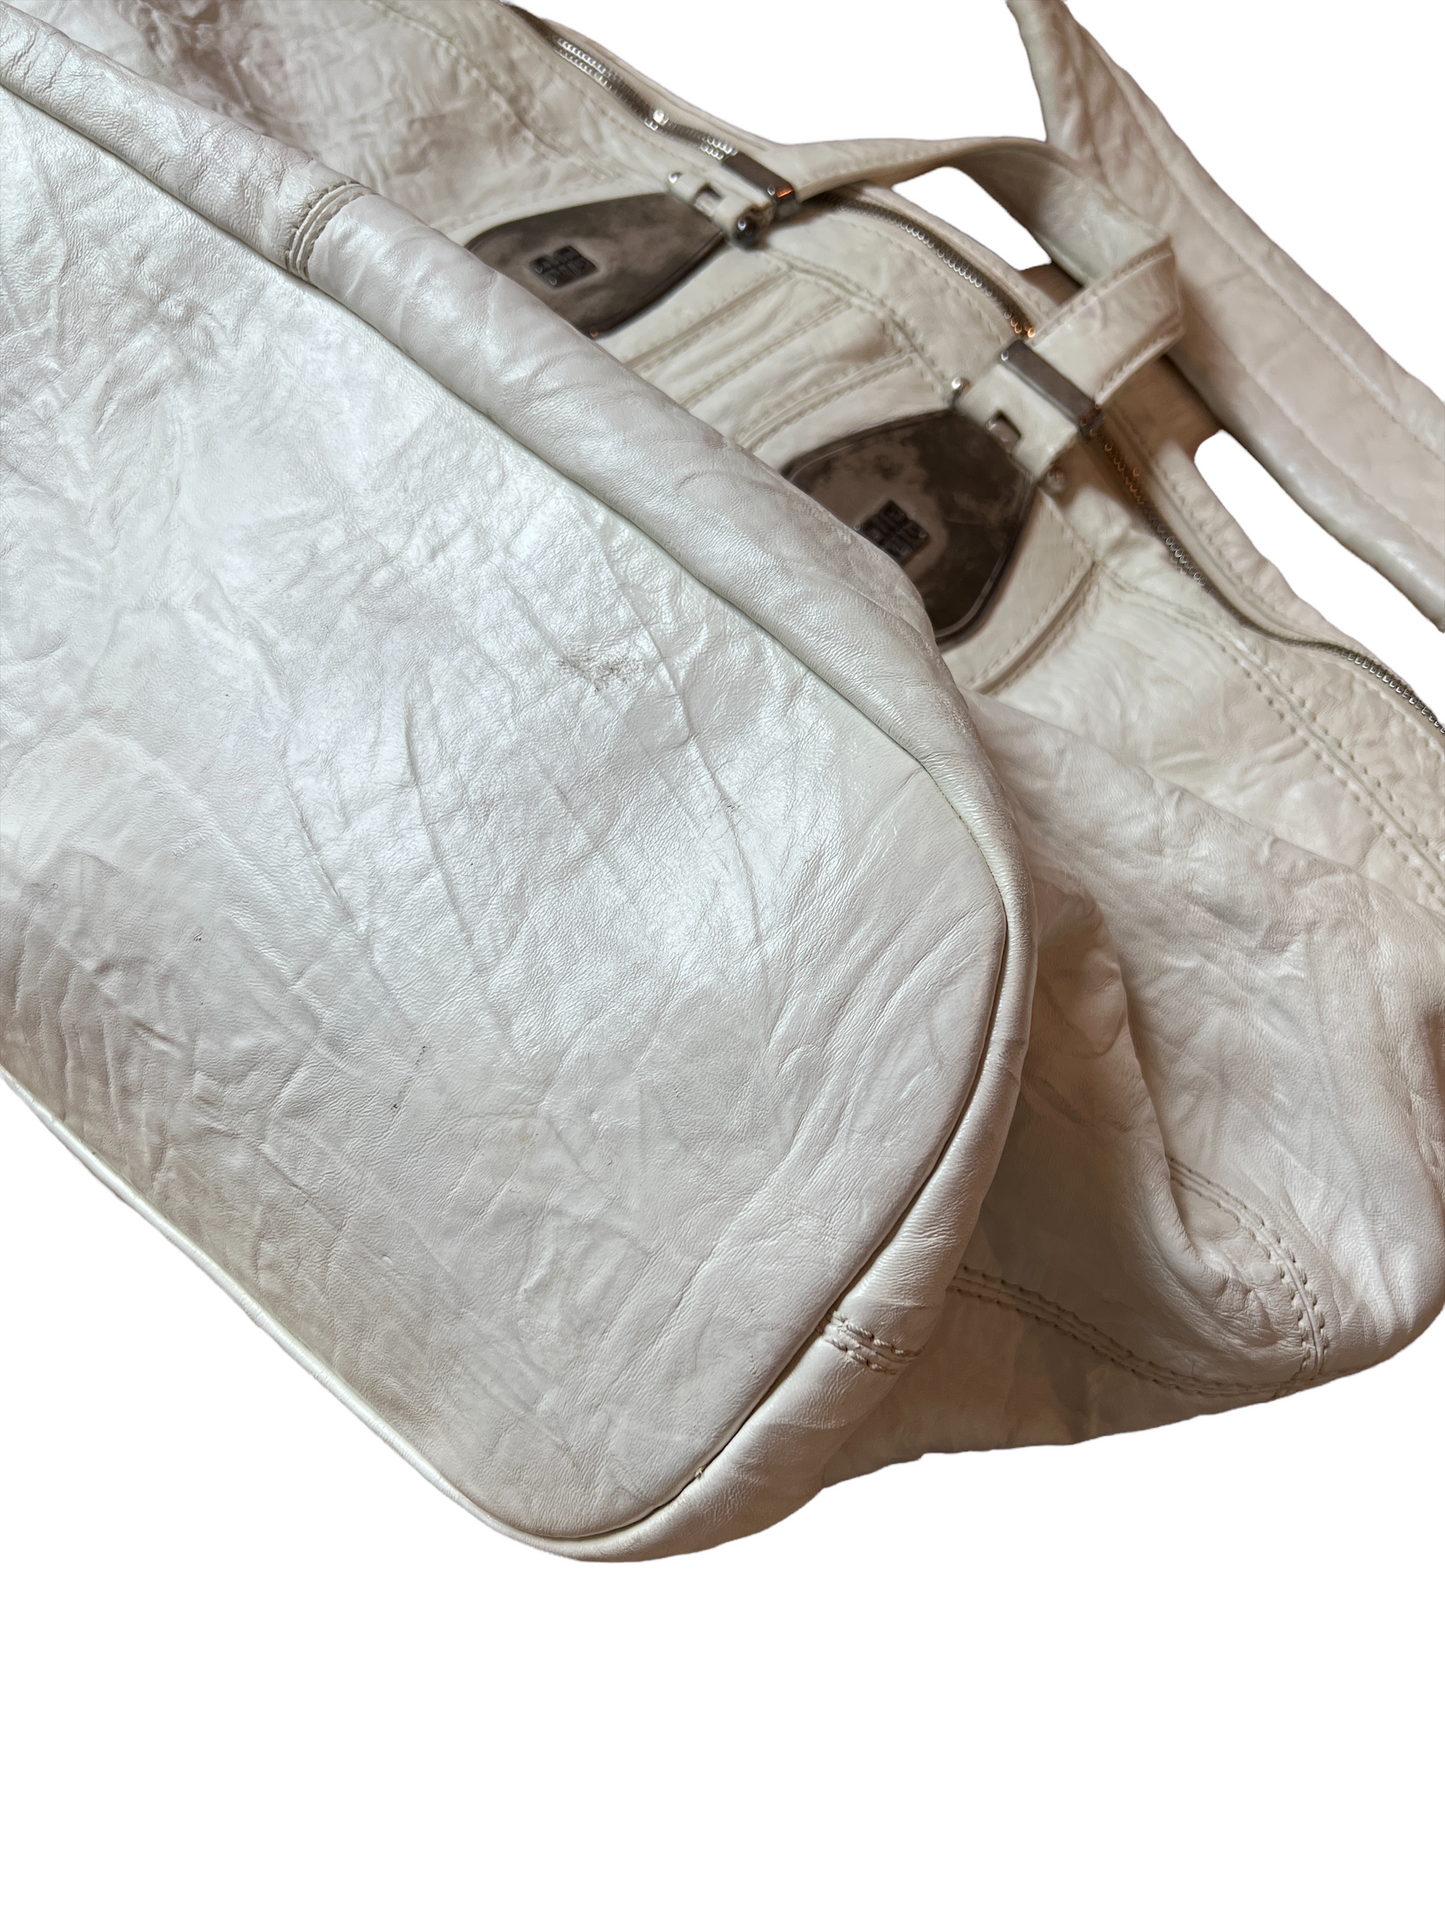 XL White Leather Nightingale Bag